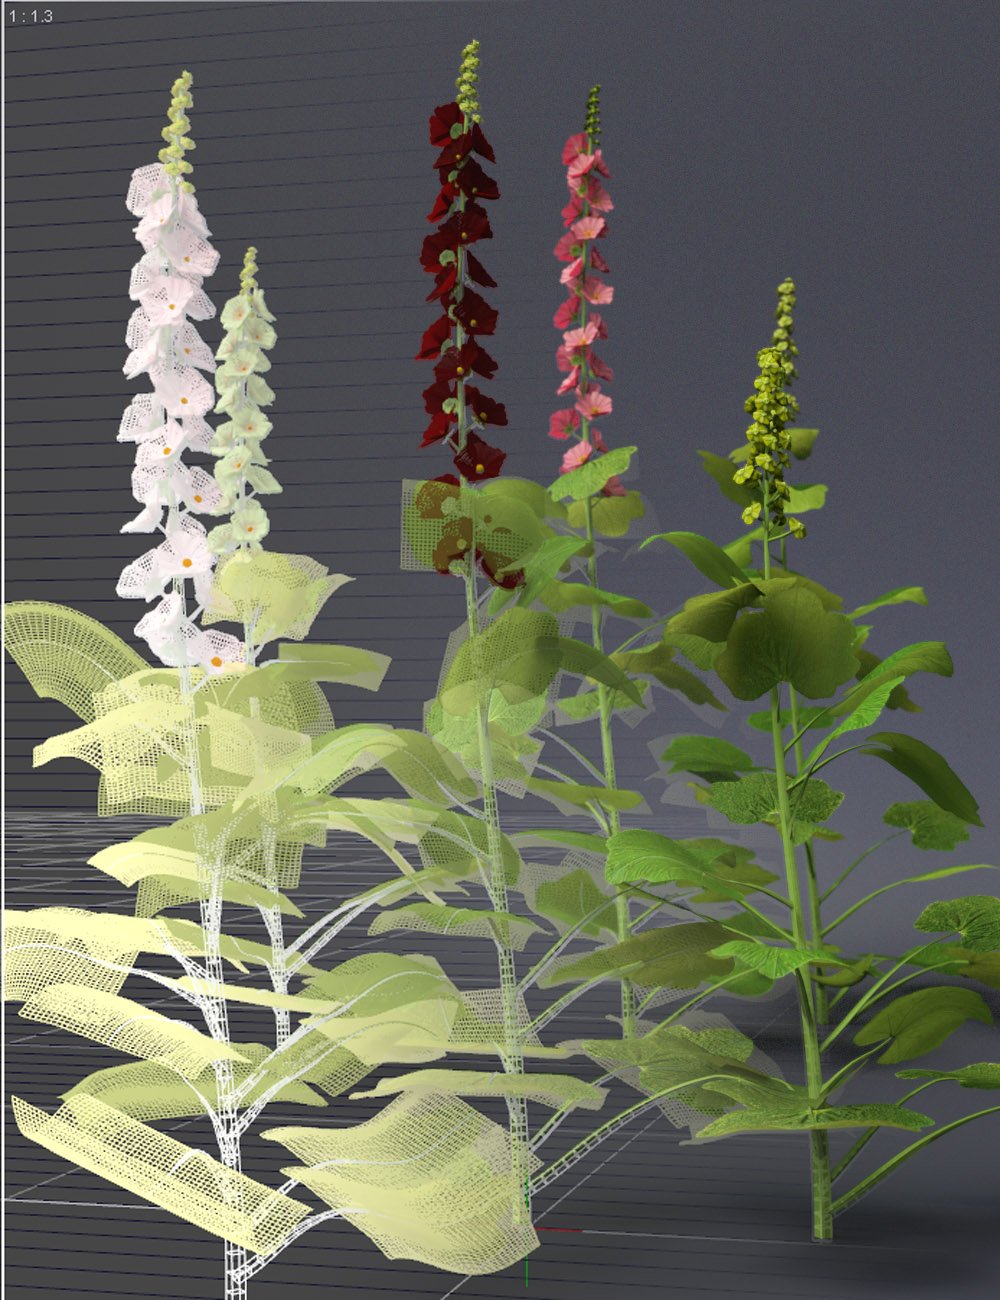 Cottage Garden Flowers - Hollyhocks by: MartinJFrost, 3D Models by Daz 3D